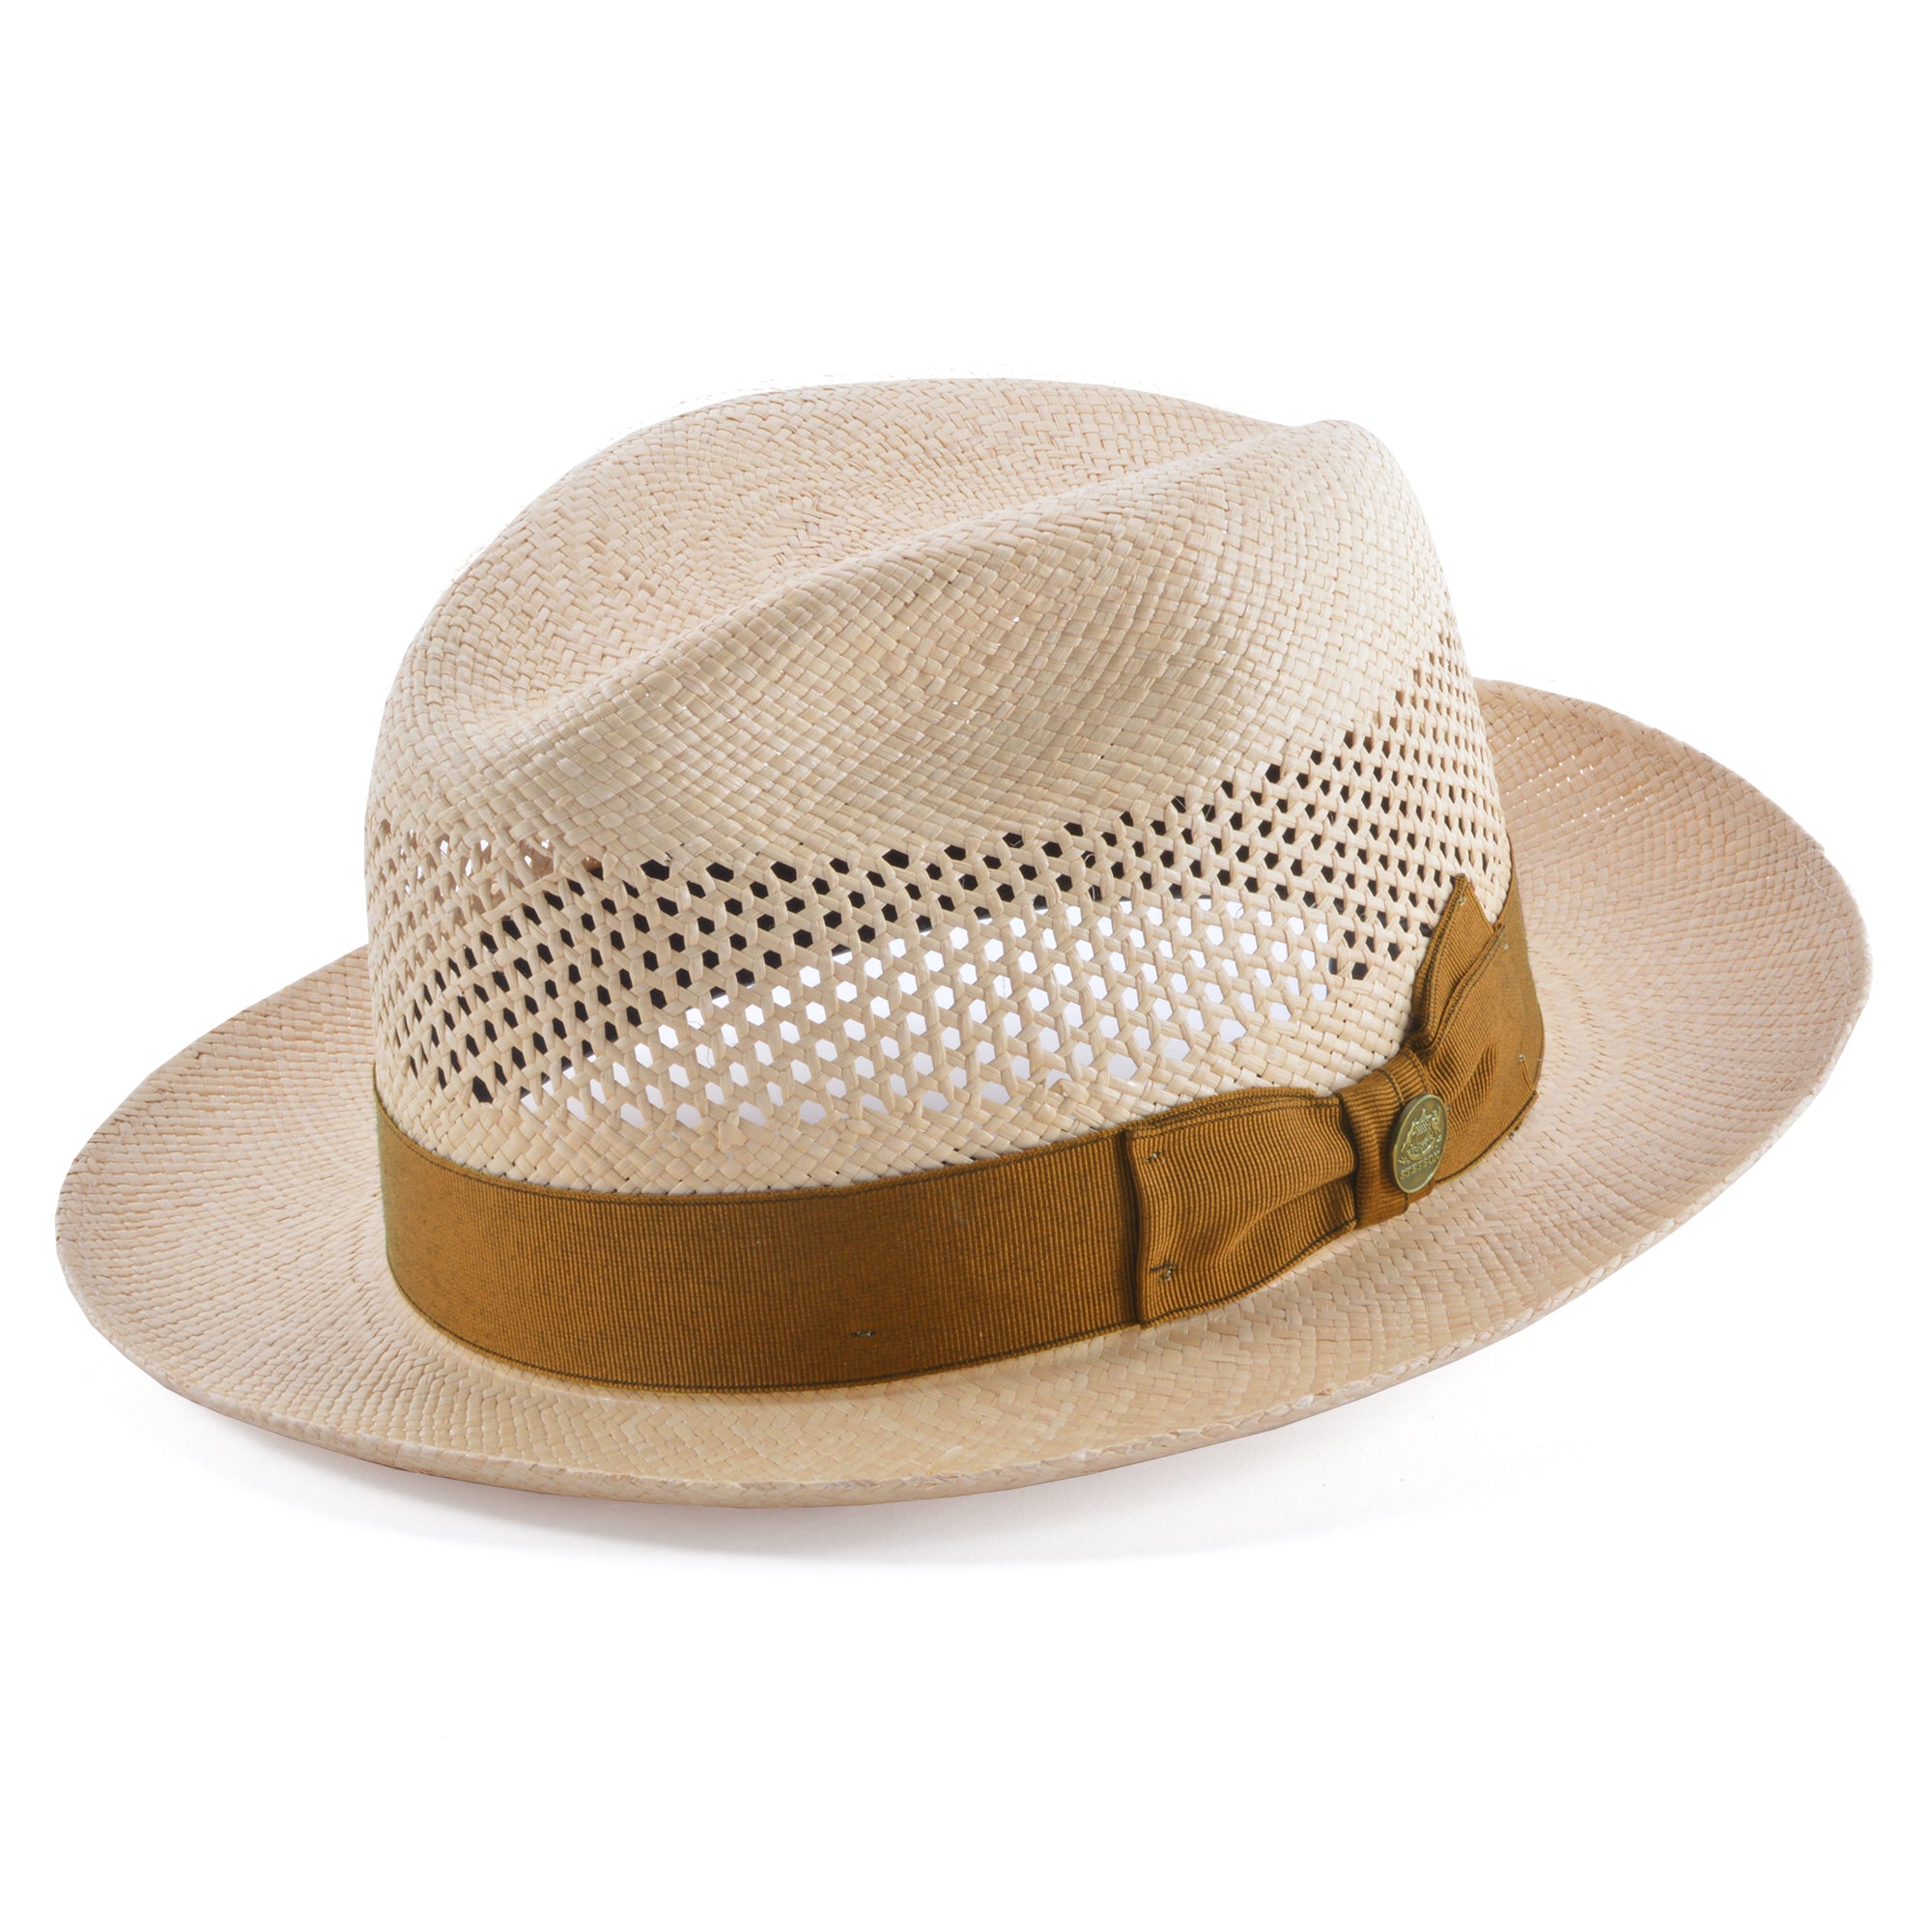 Stetson The Moor Panama Straw Fedora Hat with Box